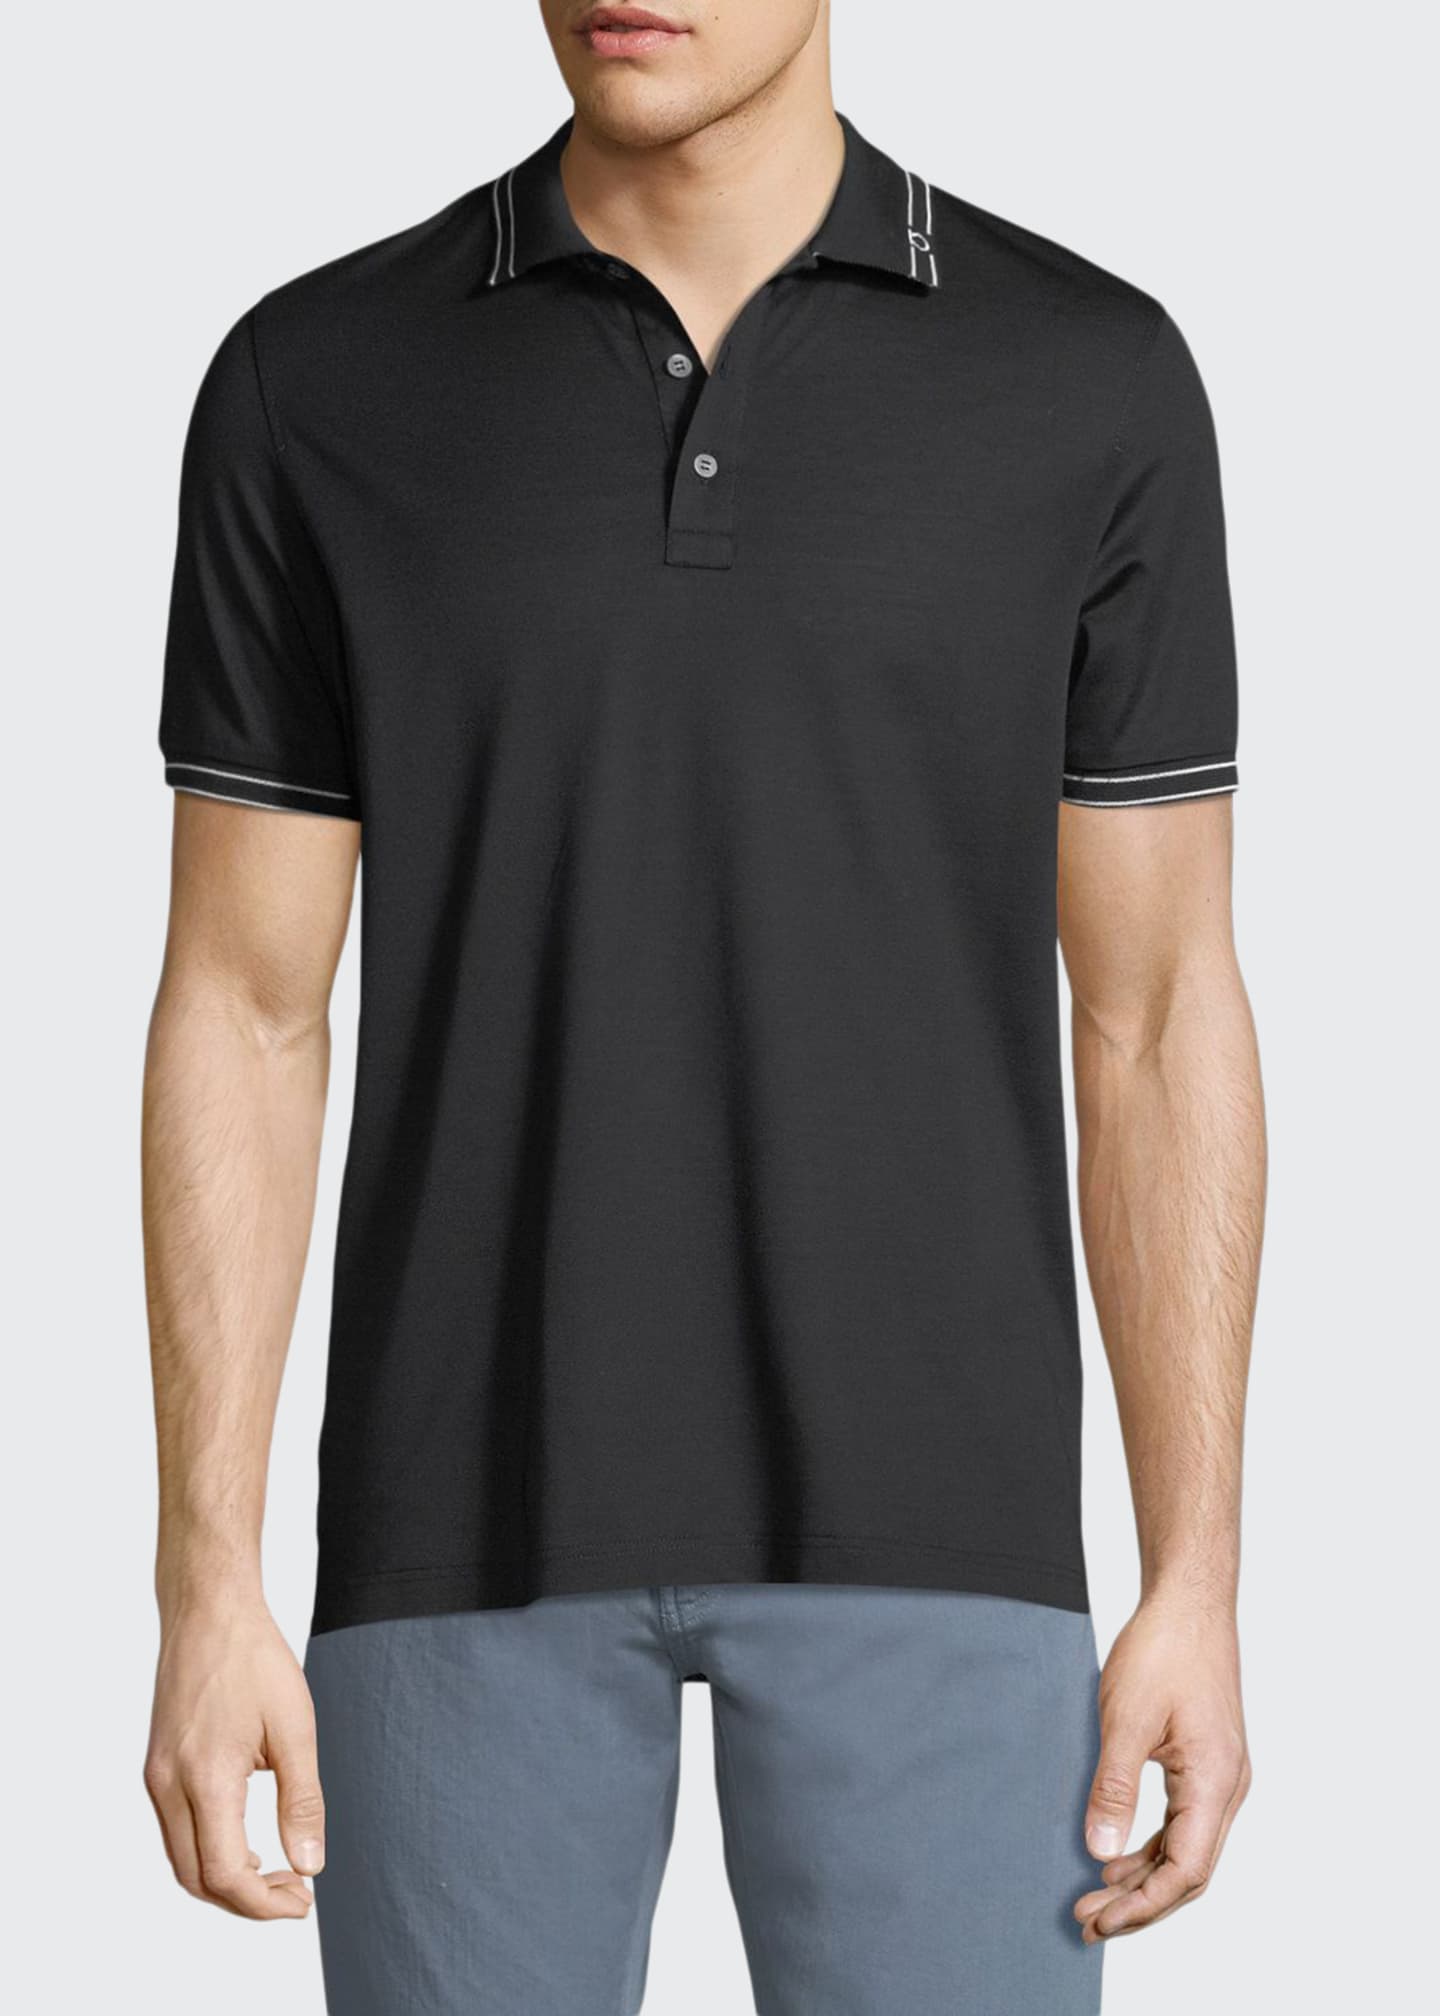 Salvatore Ferragamo Men's Tipped Cotton Polo Shirt - Bergdorf Goodman